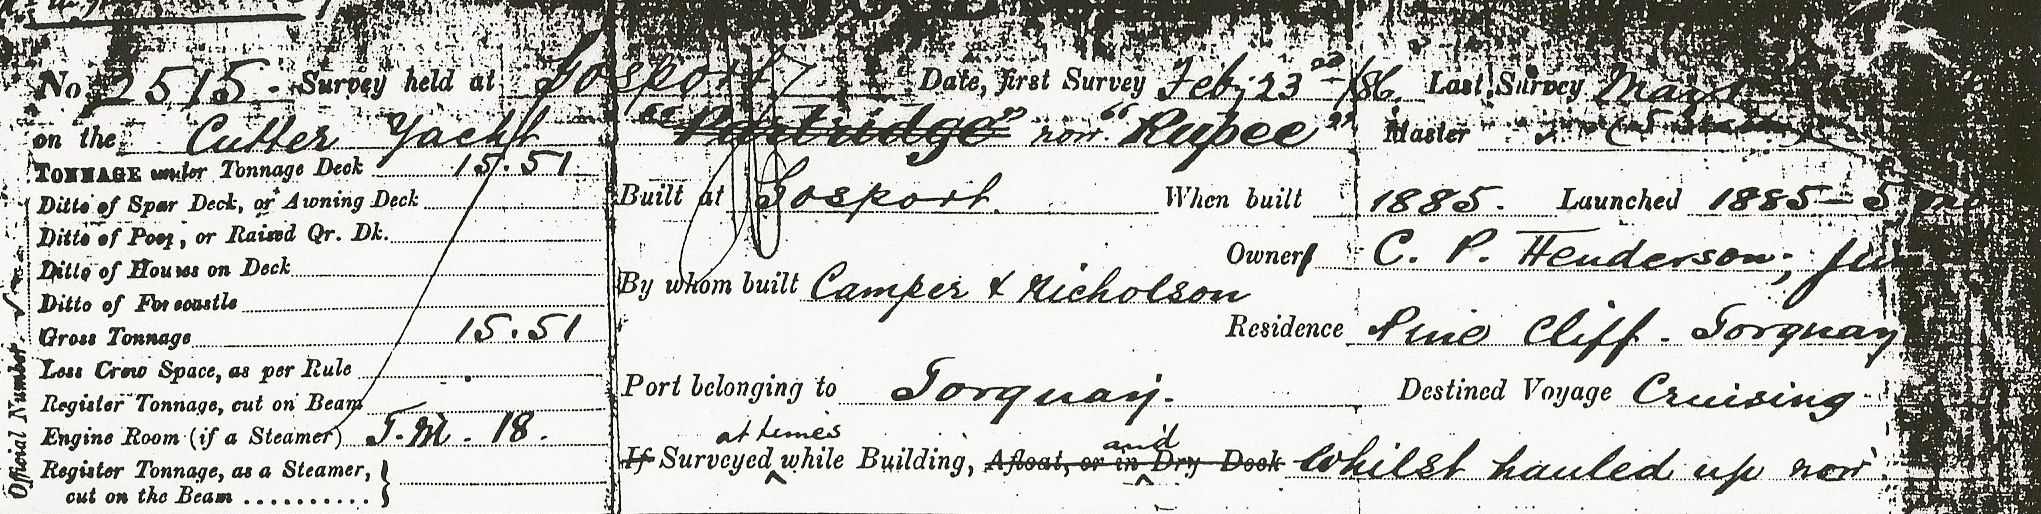 23 February 1886 Survey of Partridge - Detail